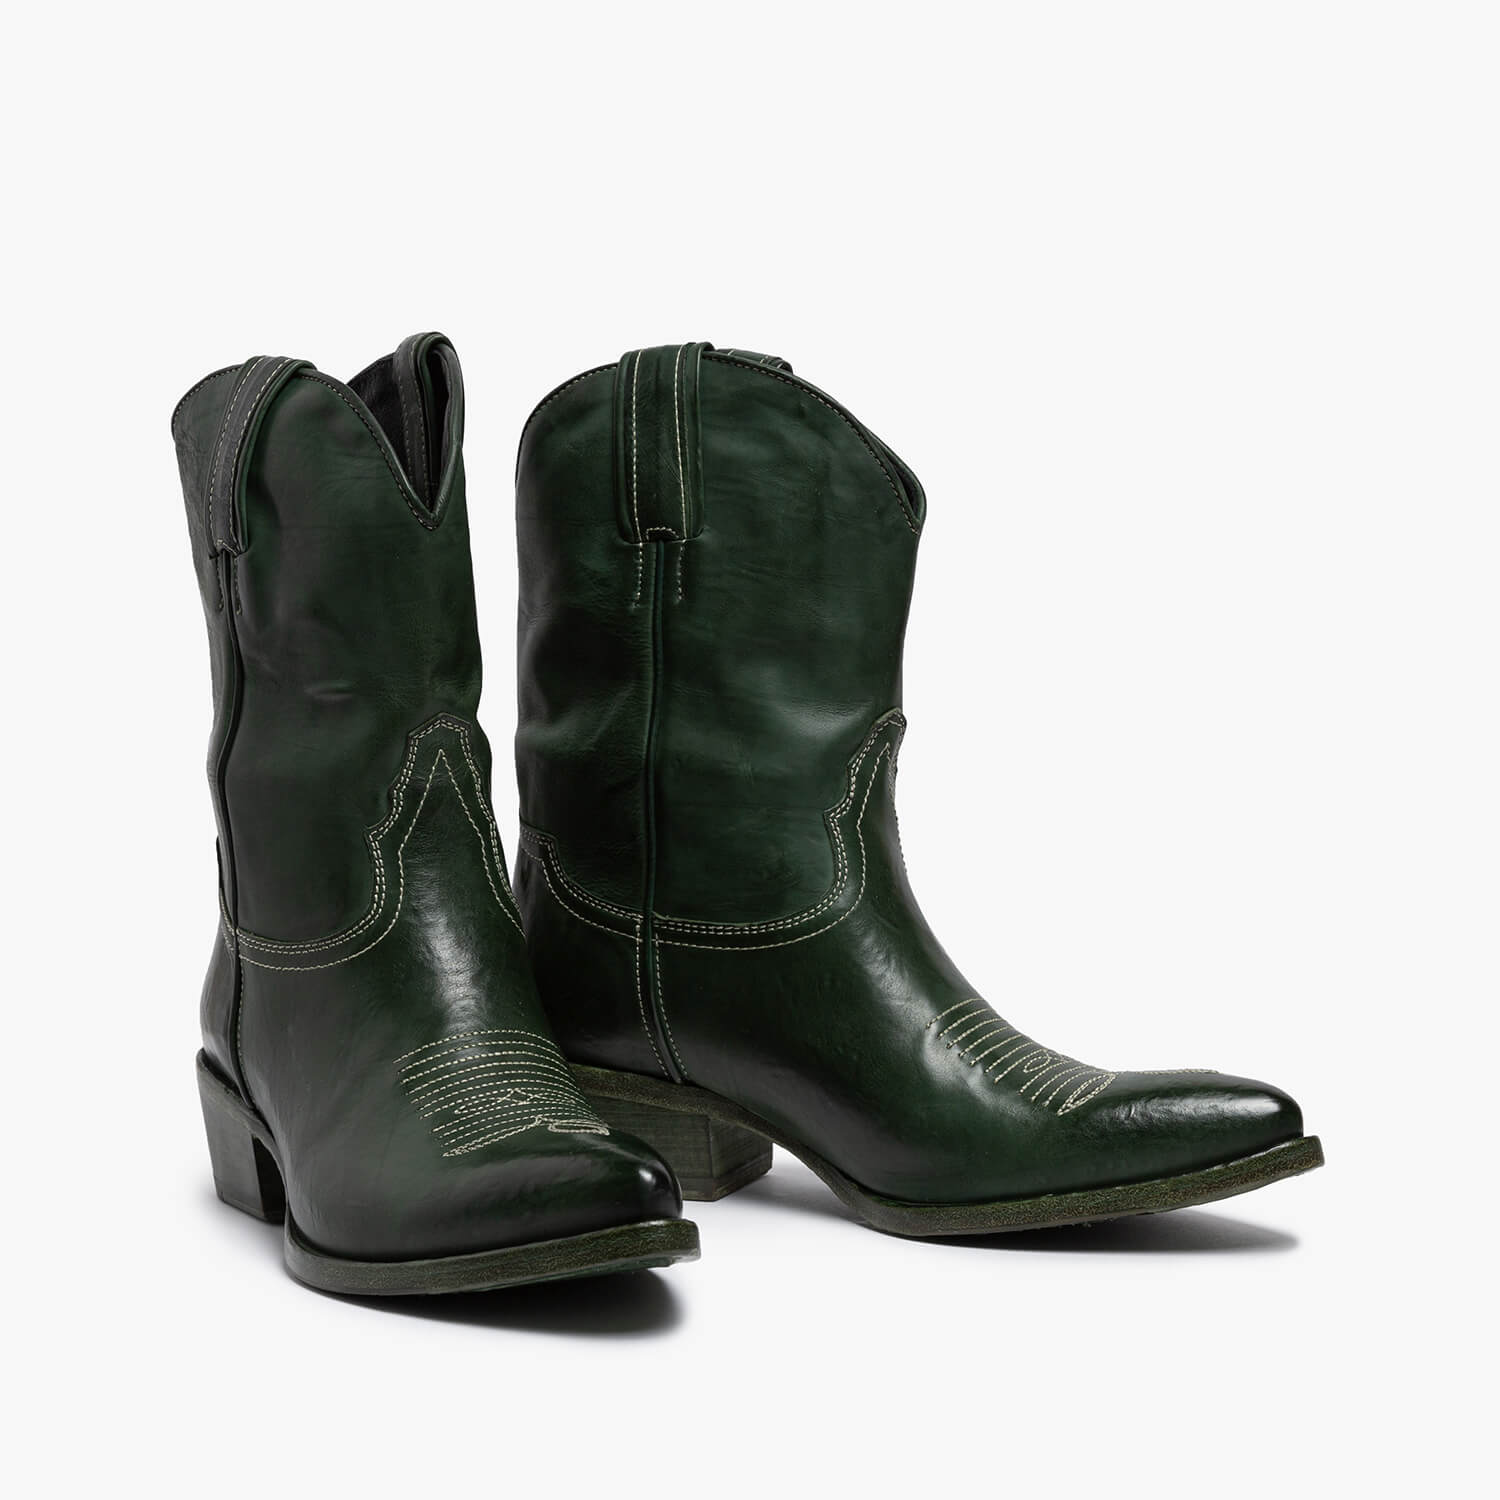 Alessandra | Calf leather dark green mid Texan boot